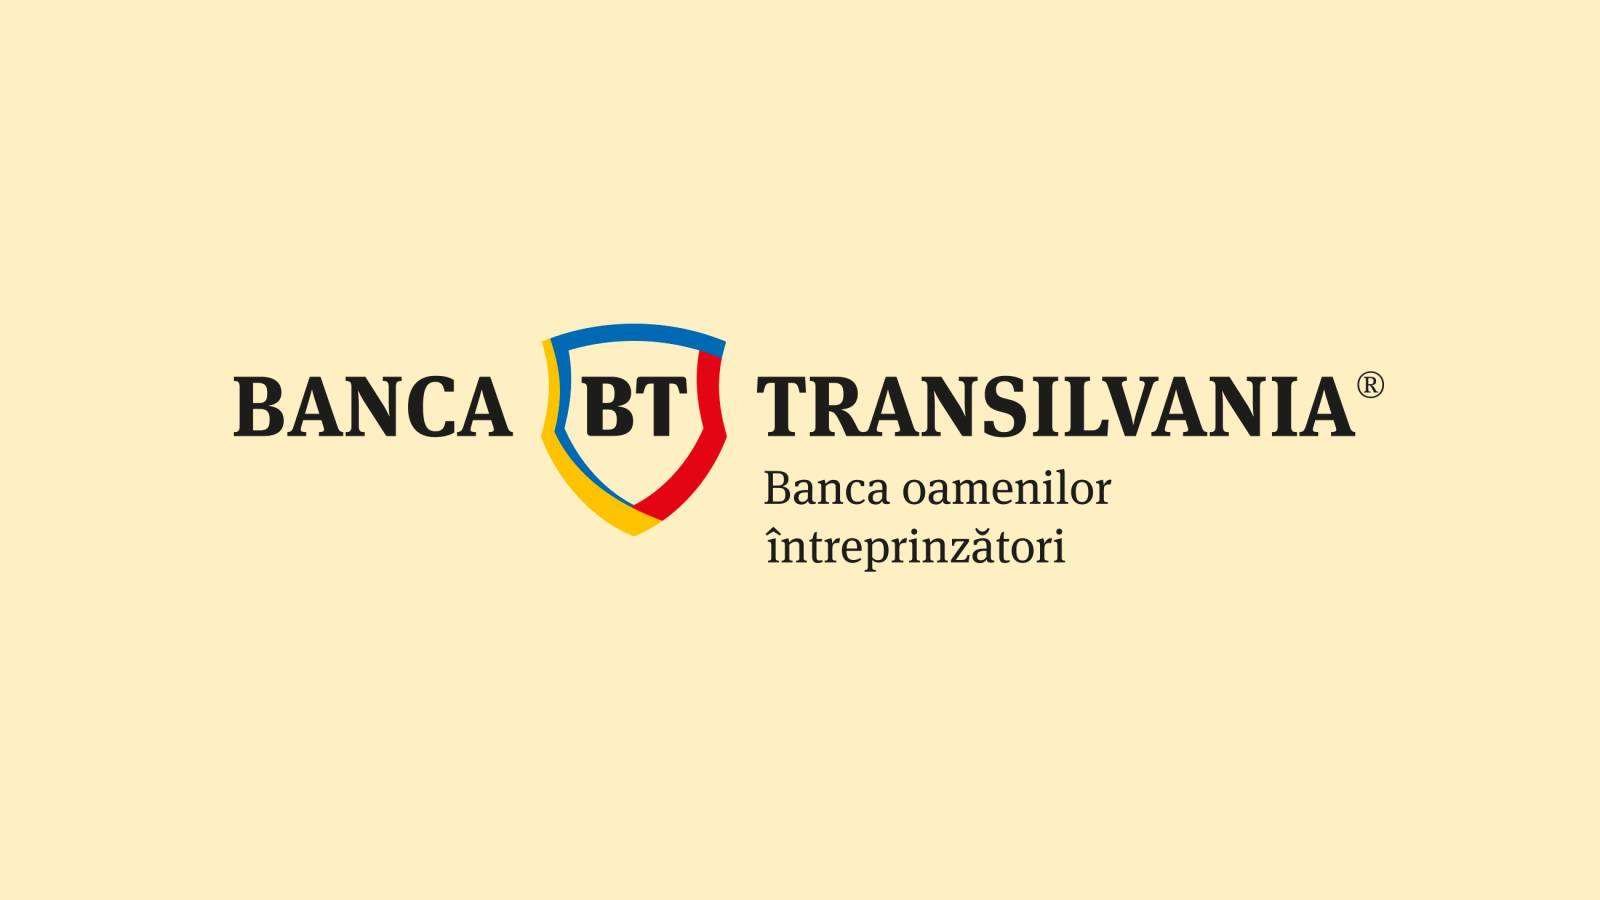 BANCA Transilvania Romanii Avvisa Banca Oameni GRATUITAMENTE